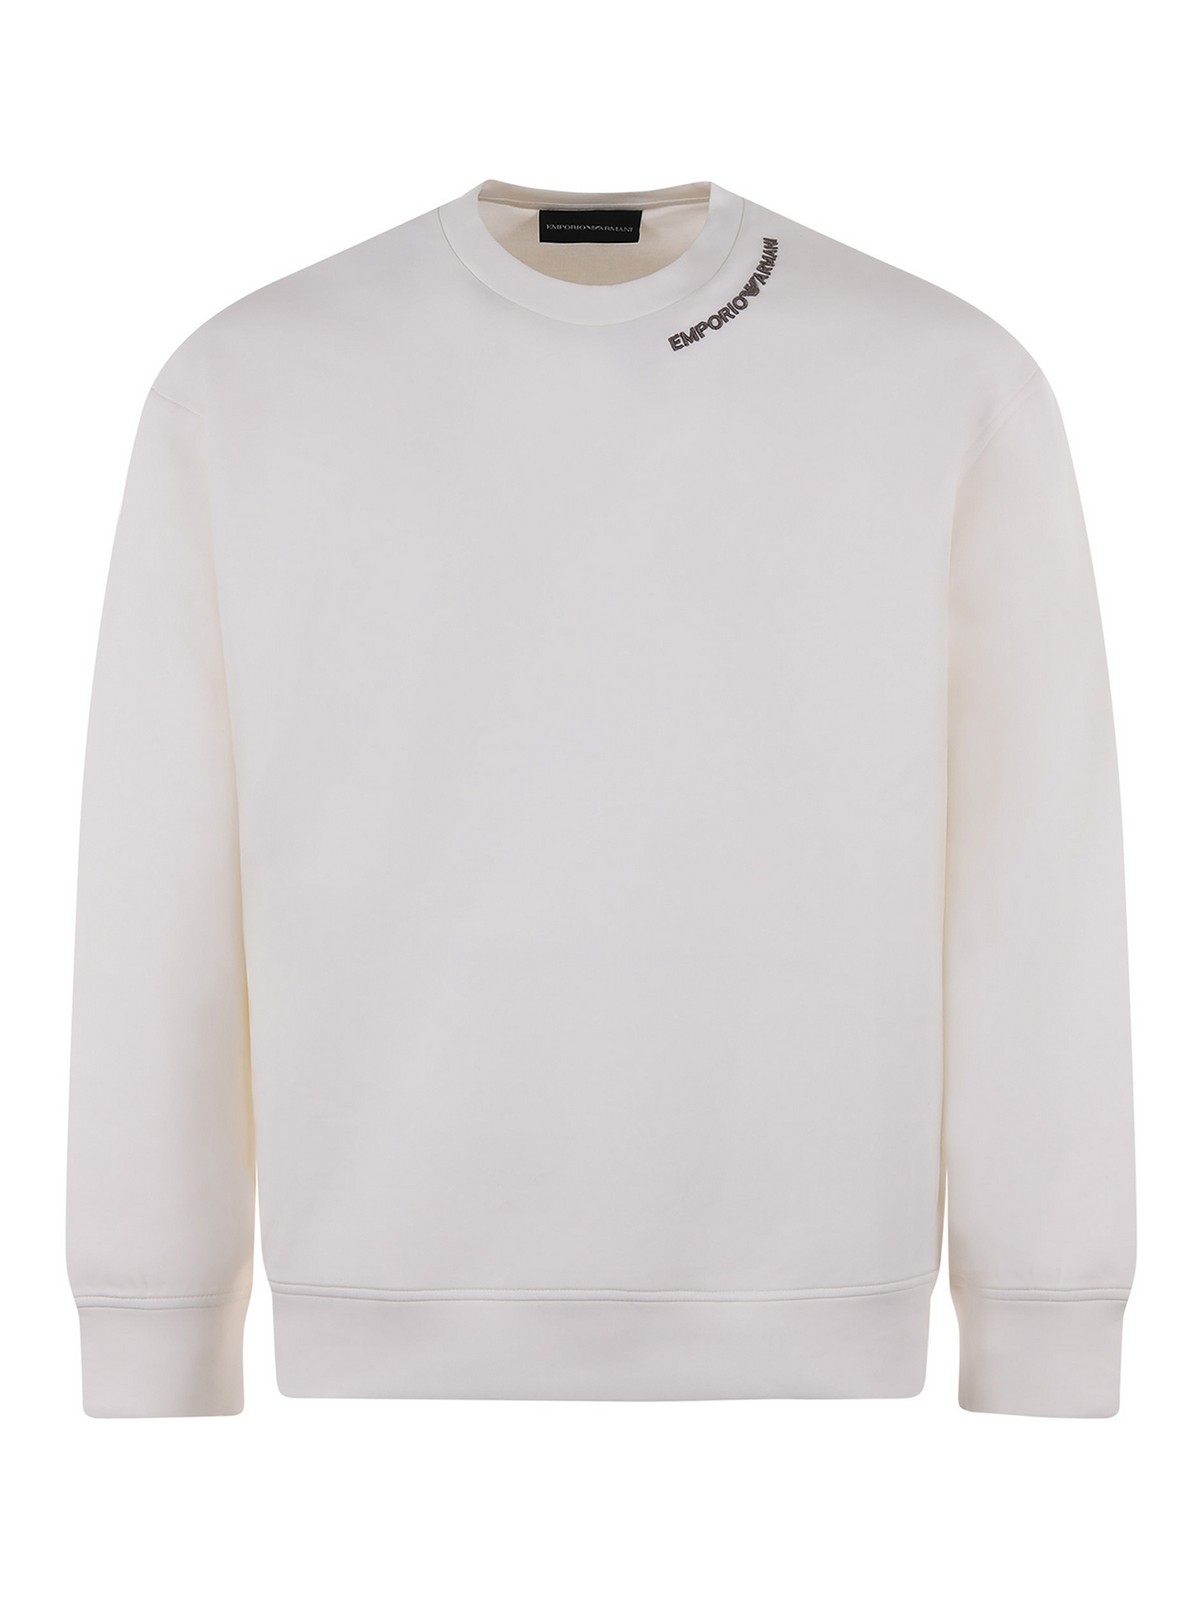 Emporio Armani Sweatshirt With Logo Around The Crewneck In White